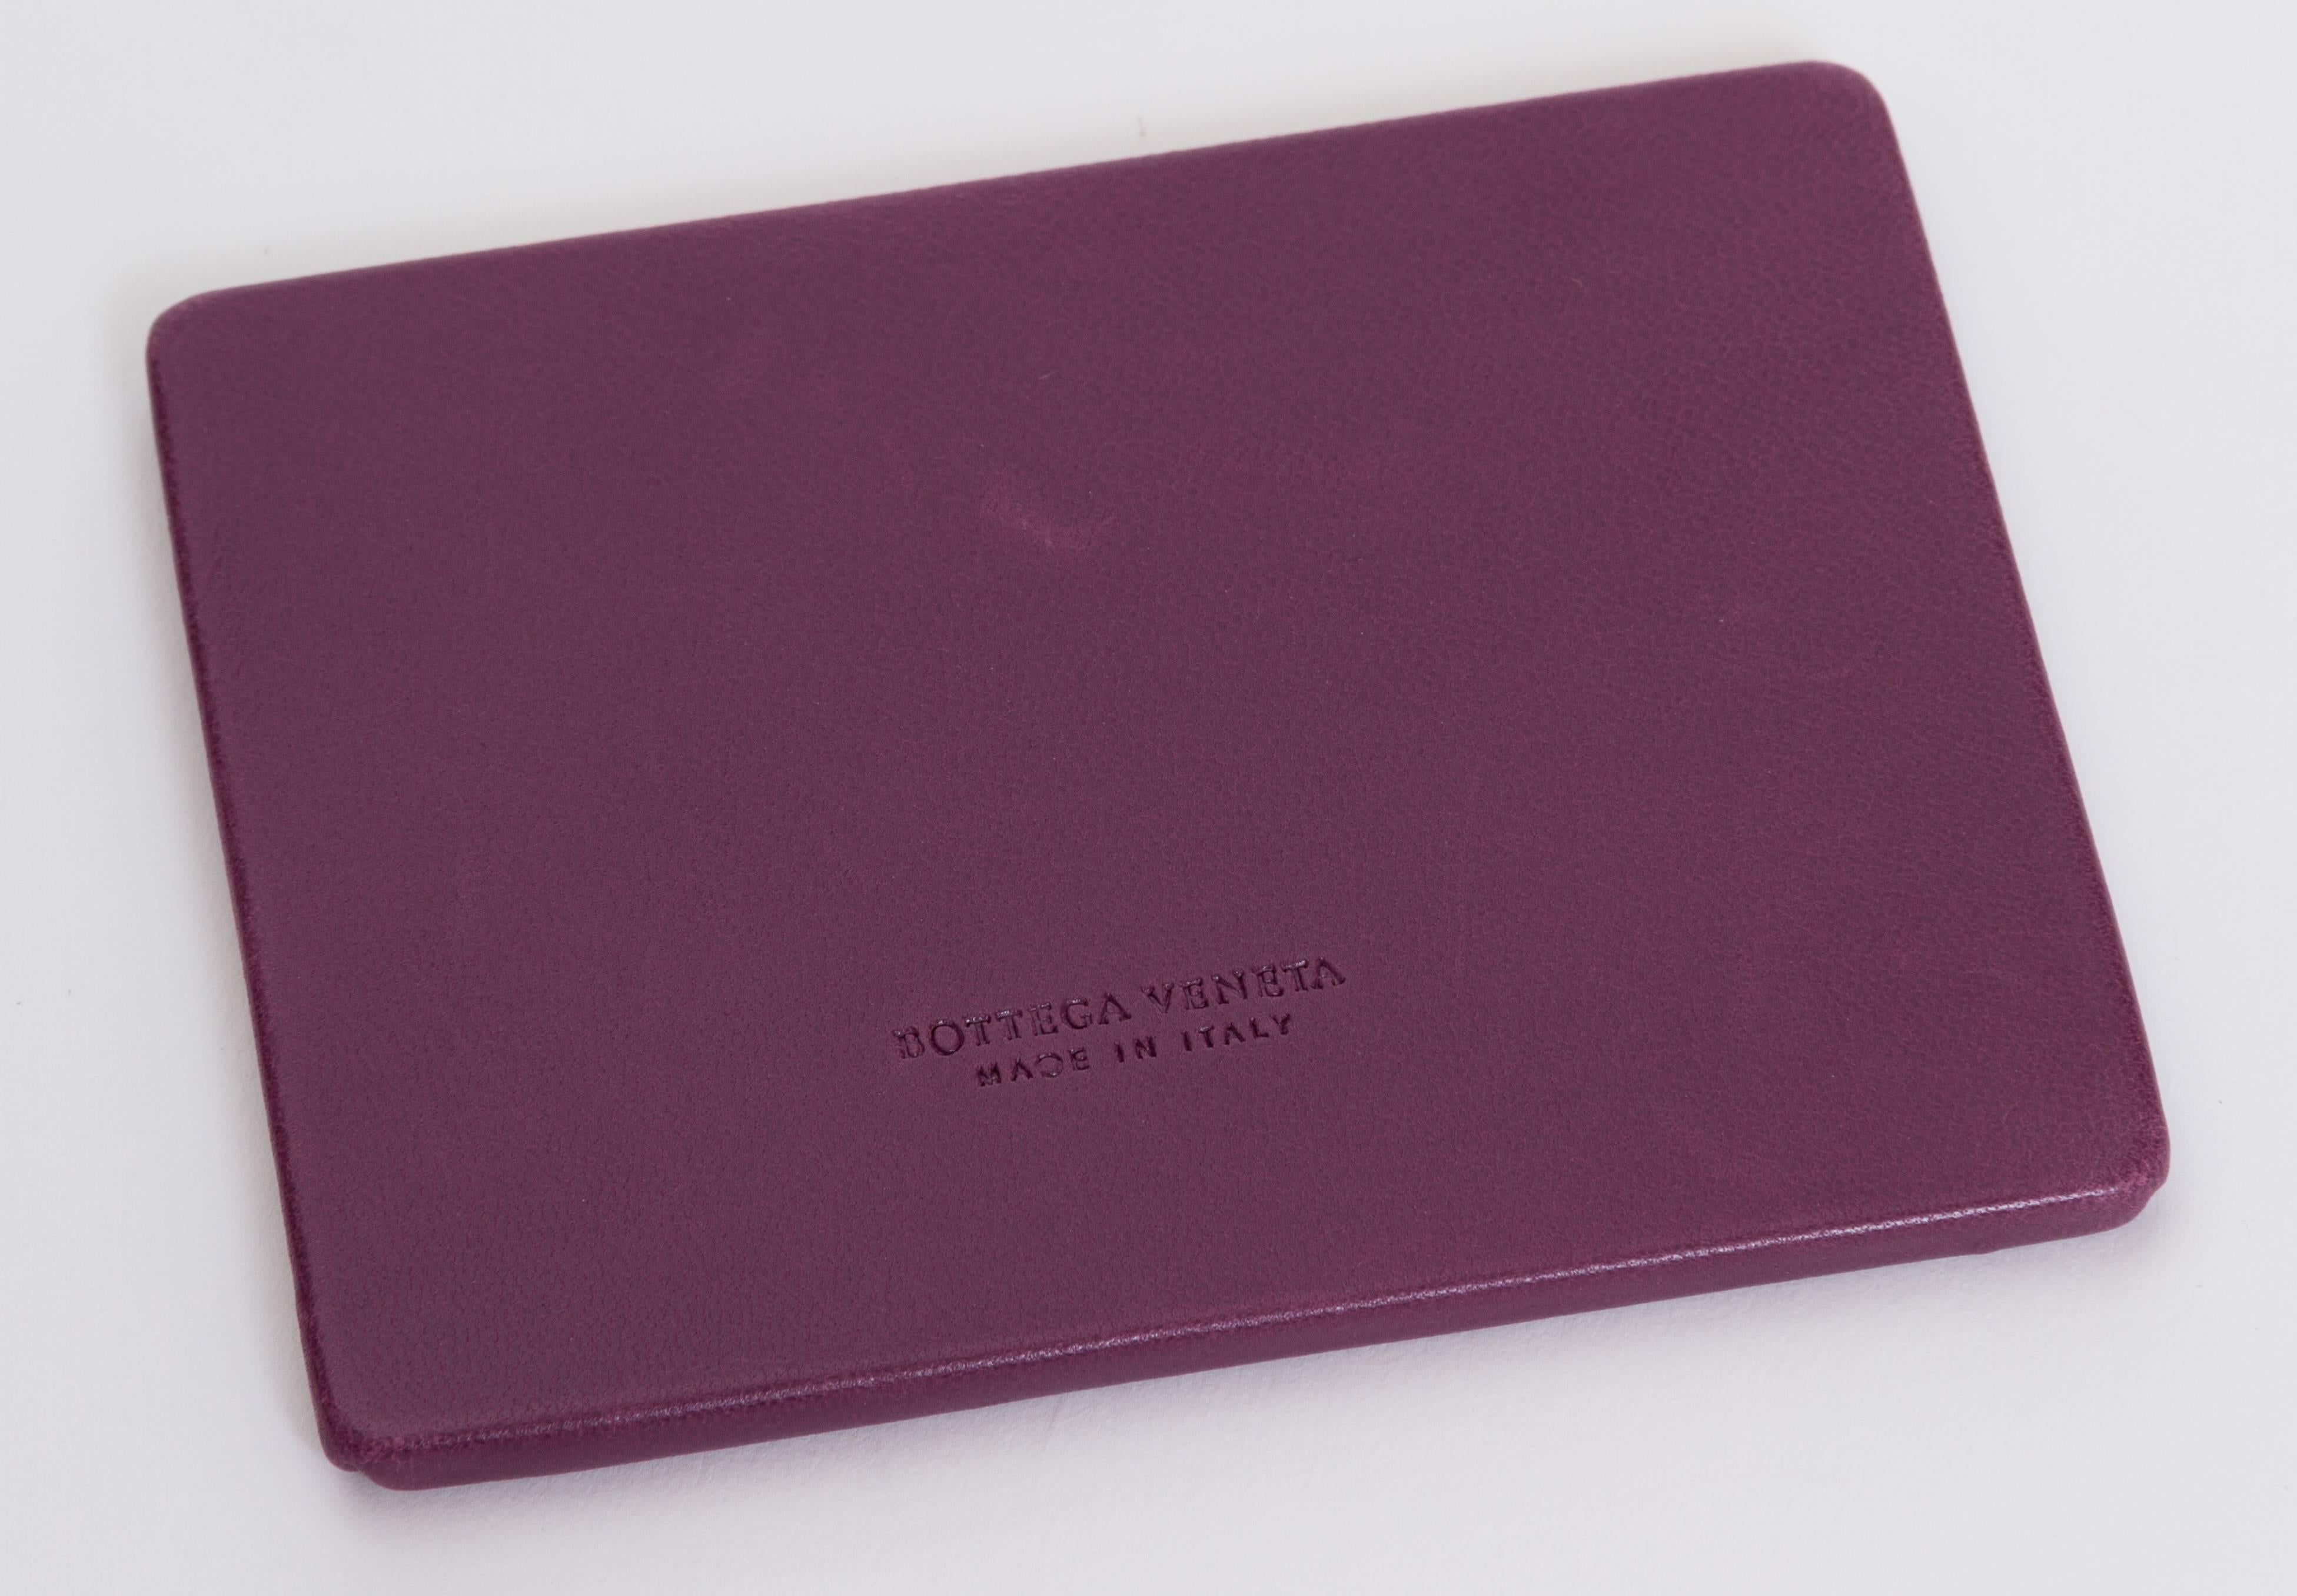 Bottega Veneta Purple Woven Medium Tote  Bag In Excellent Condition For Sale In West Hollywood, CA